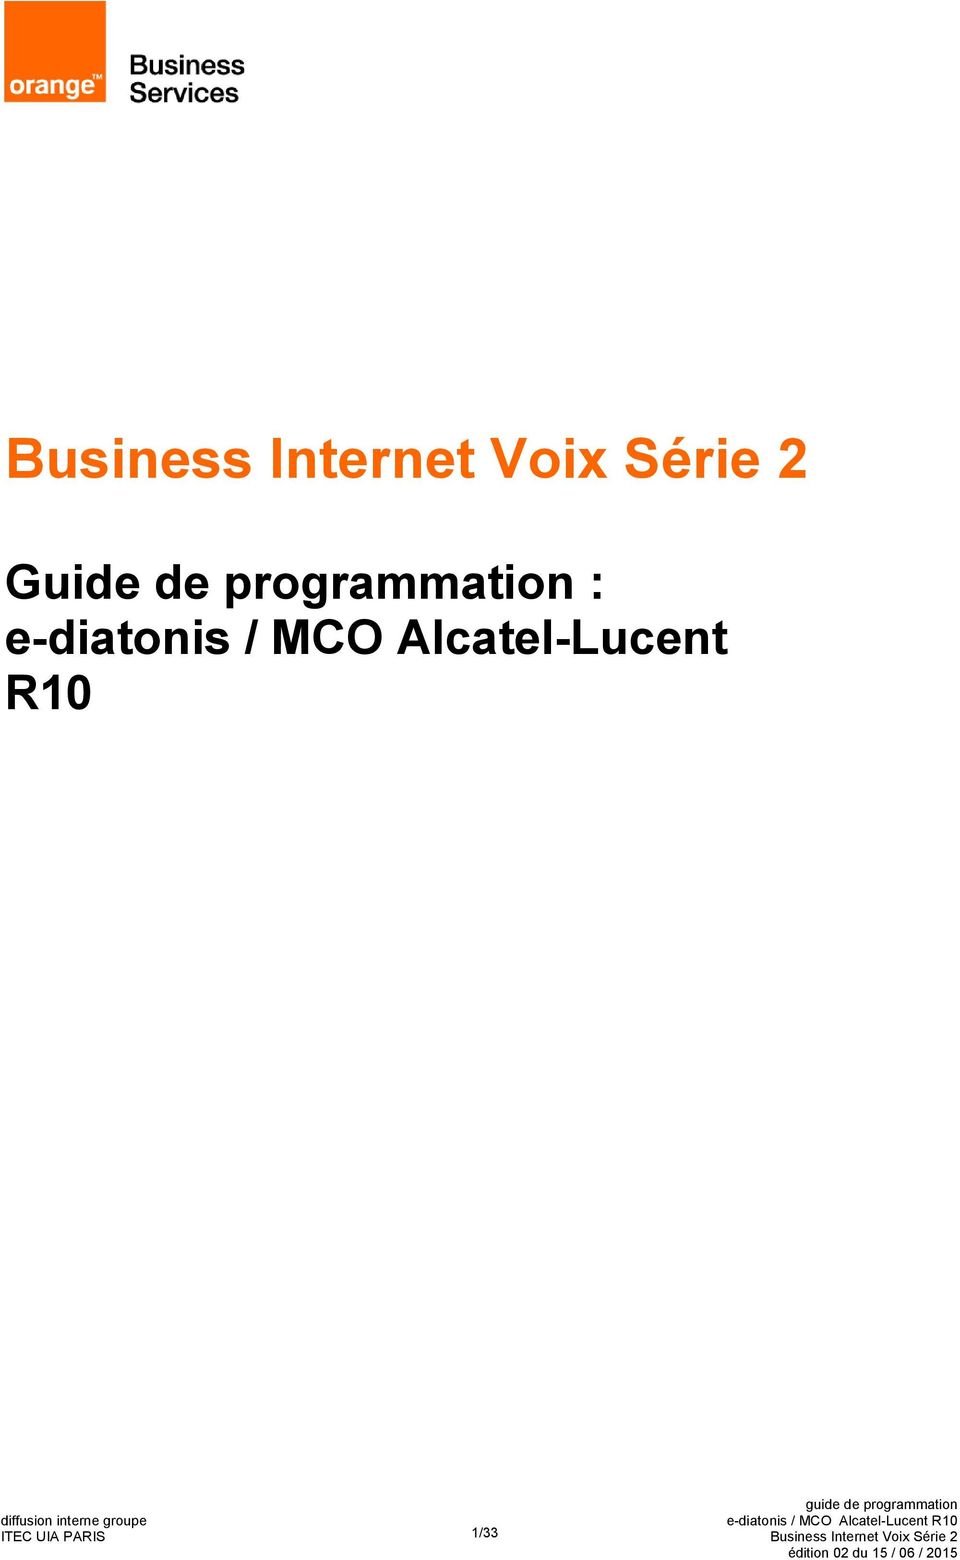 Alcatel-Lucent R10